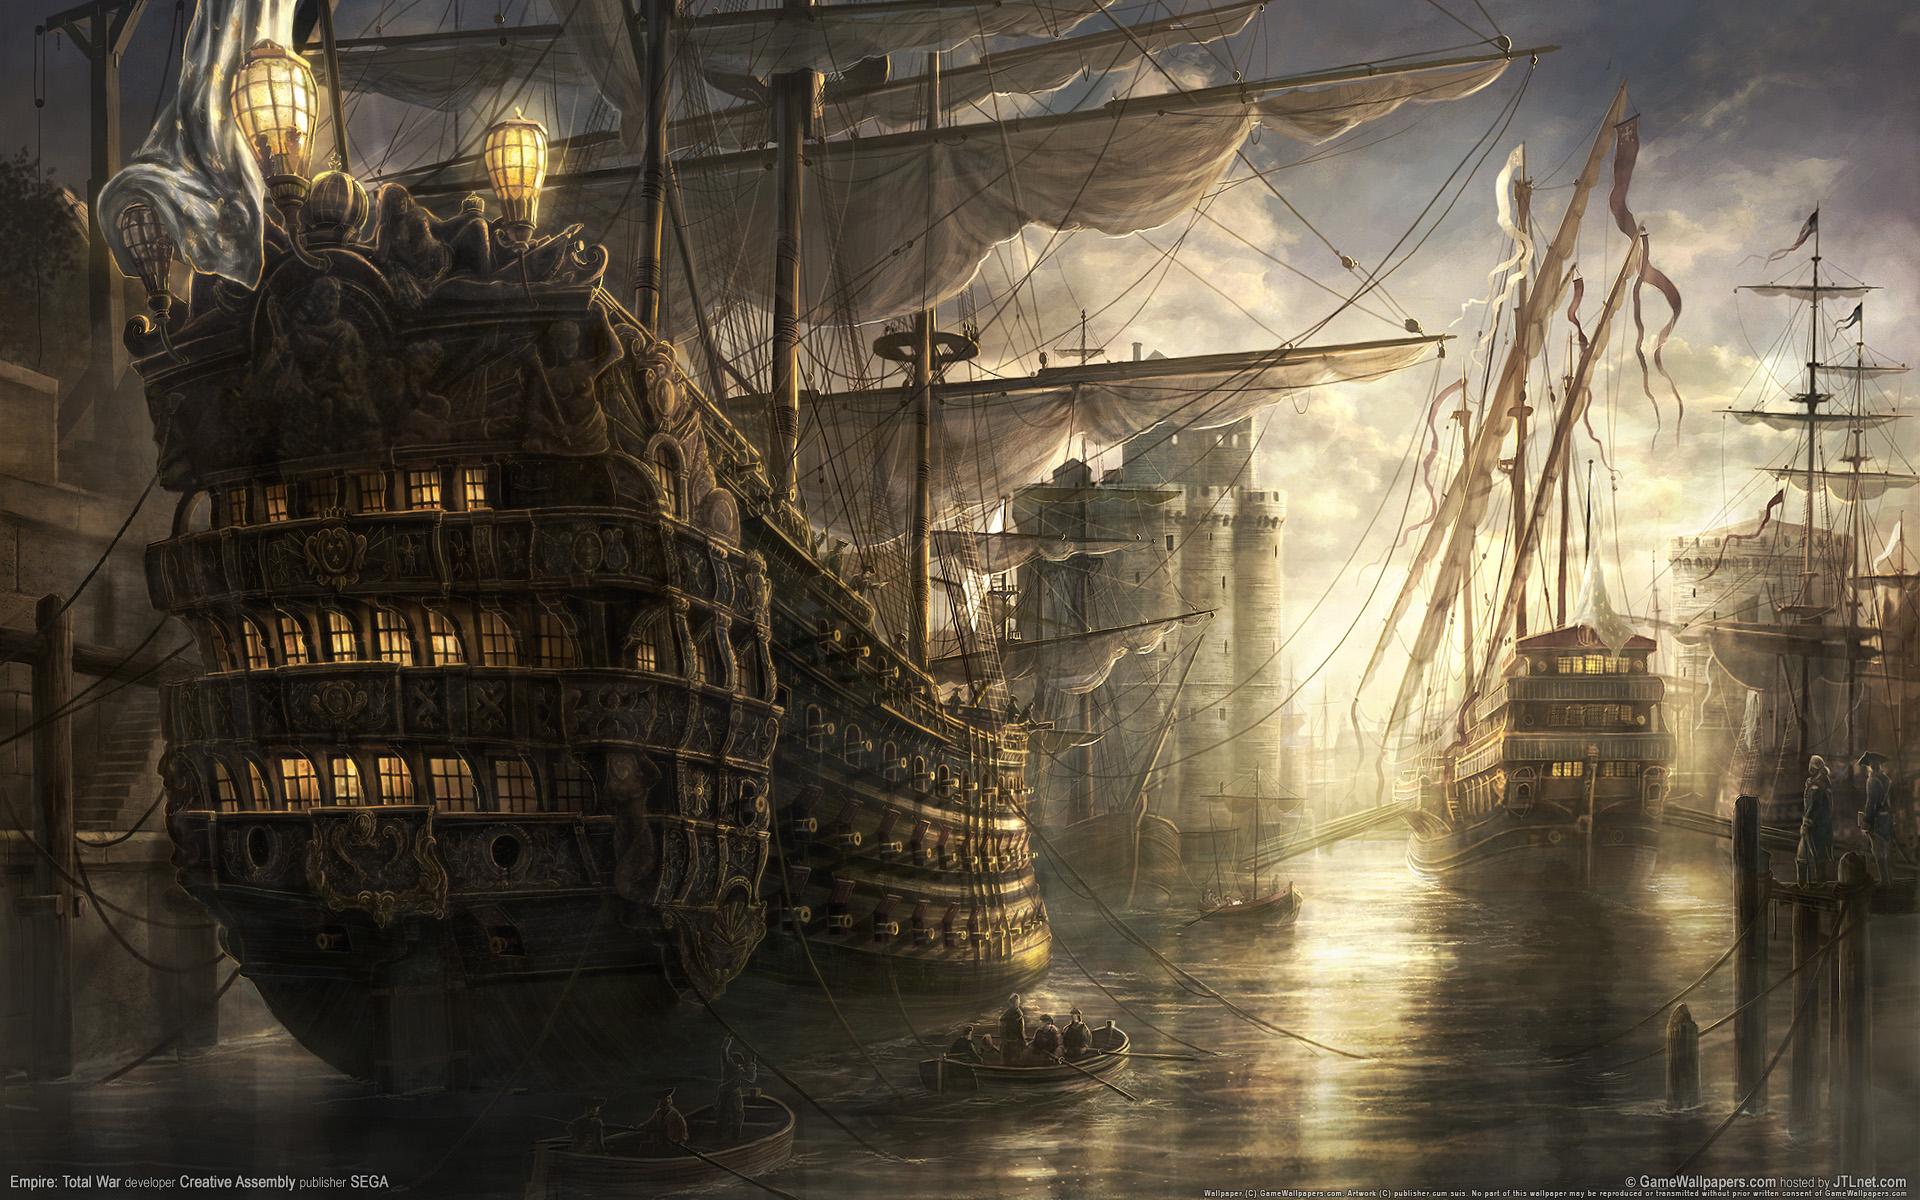 pirate ship wallpaper